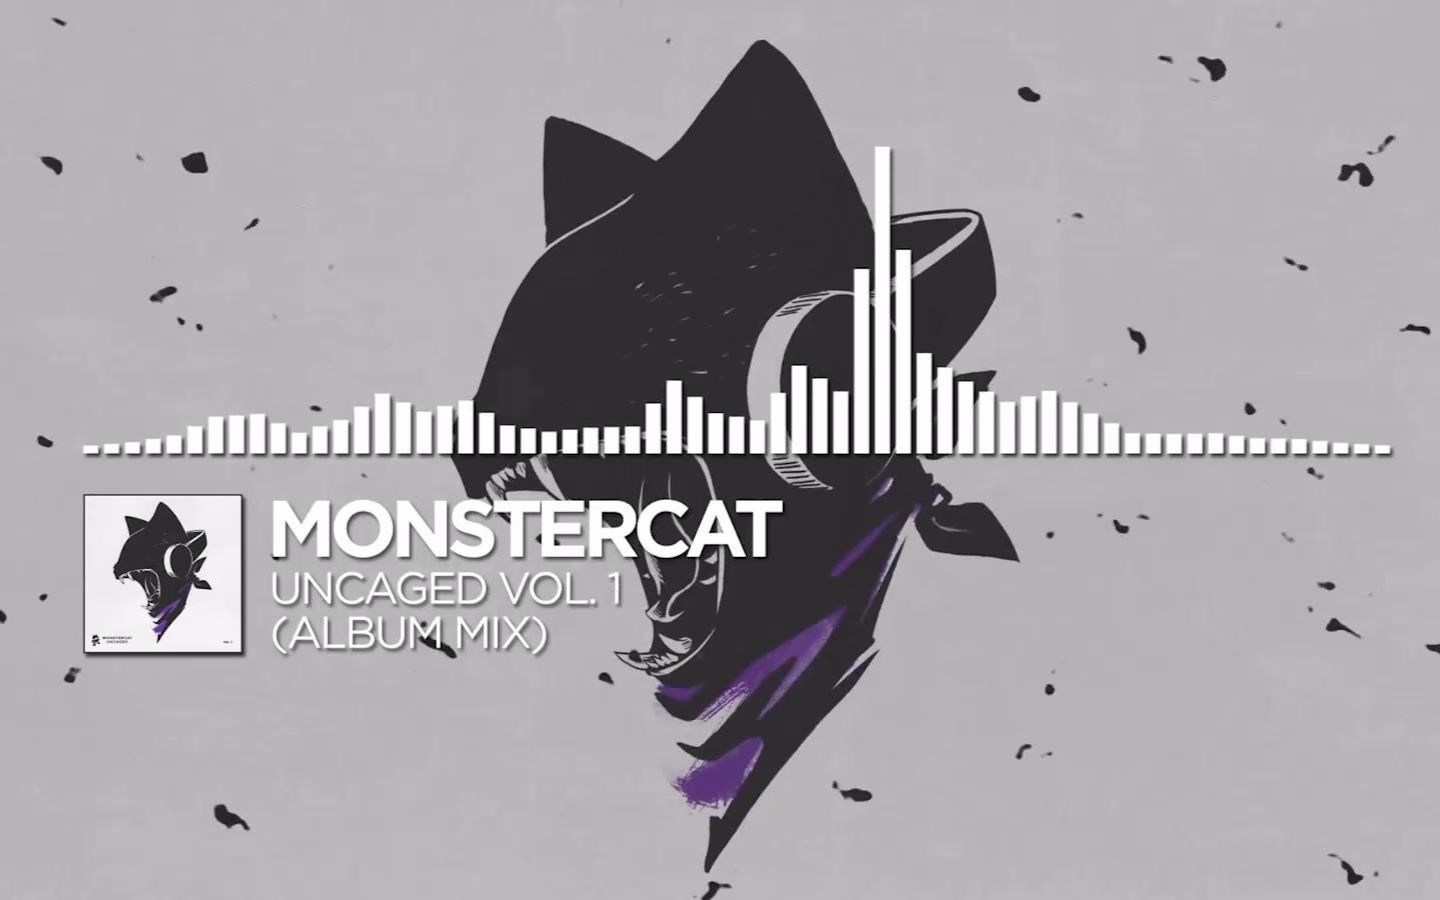 【sj搬运】monstercat uncaged - vol. 1 (album mix) 怪猫出笼!